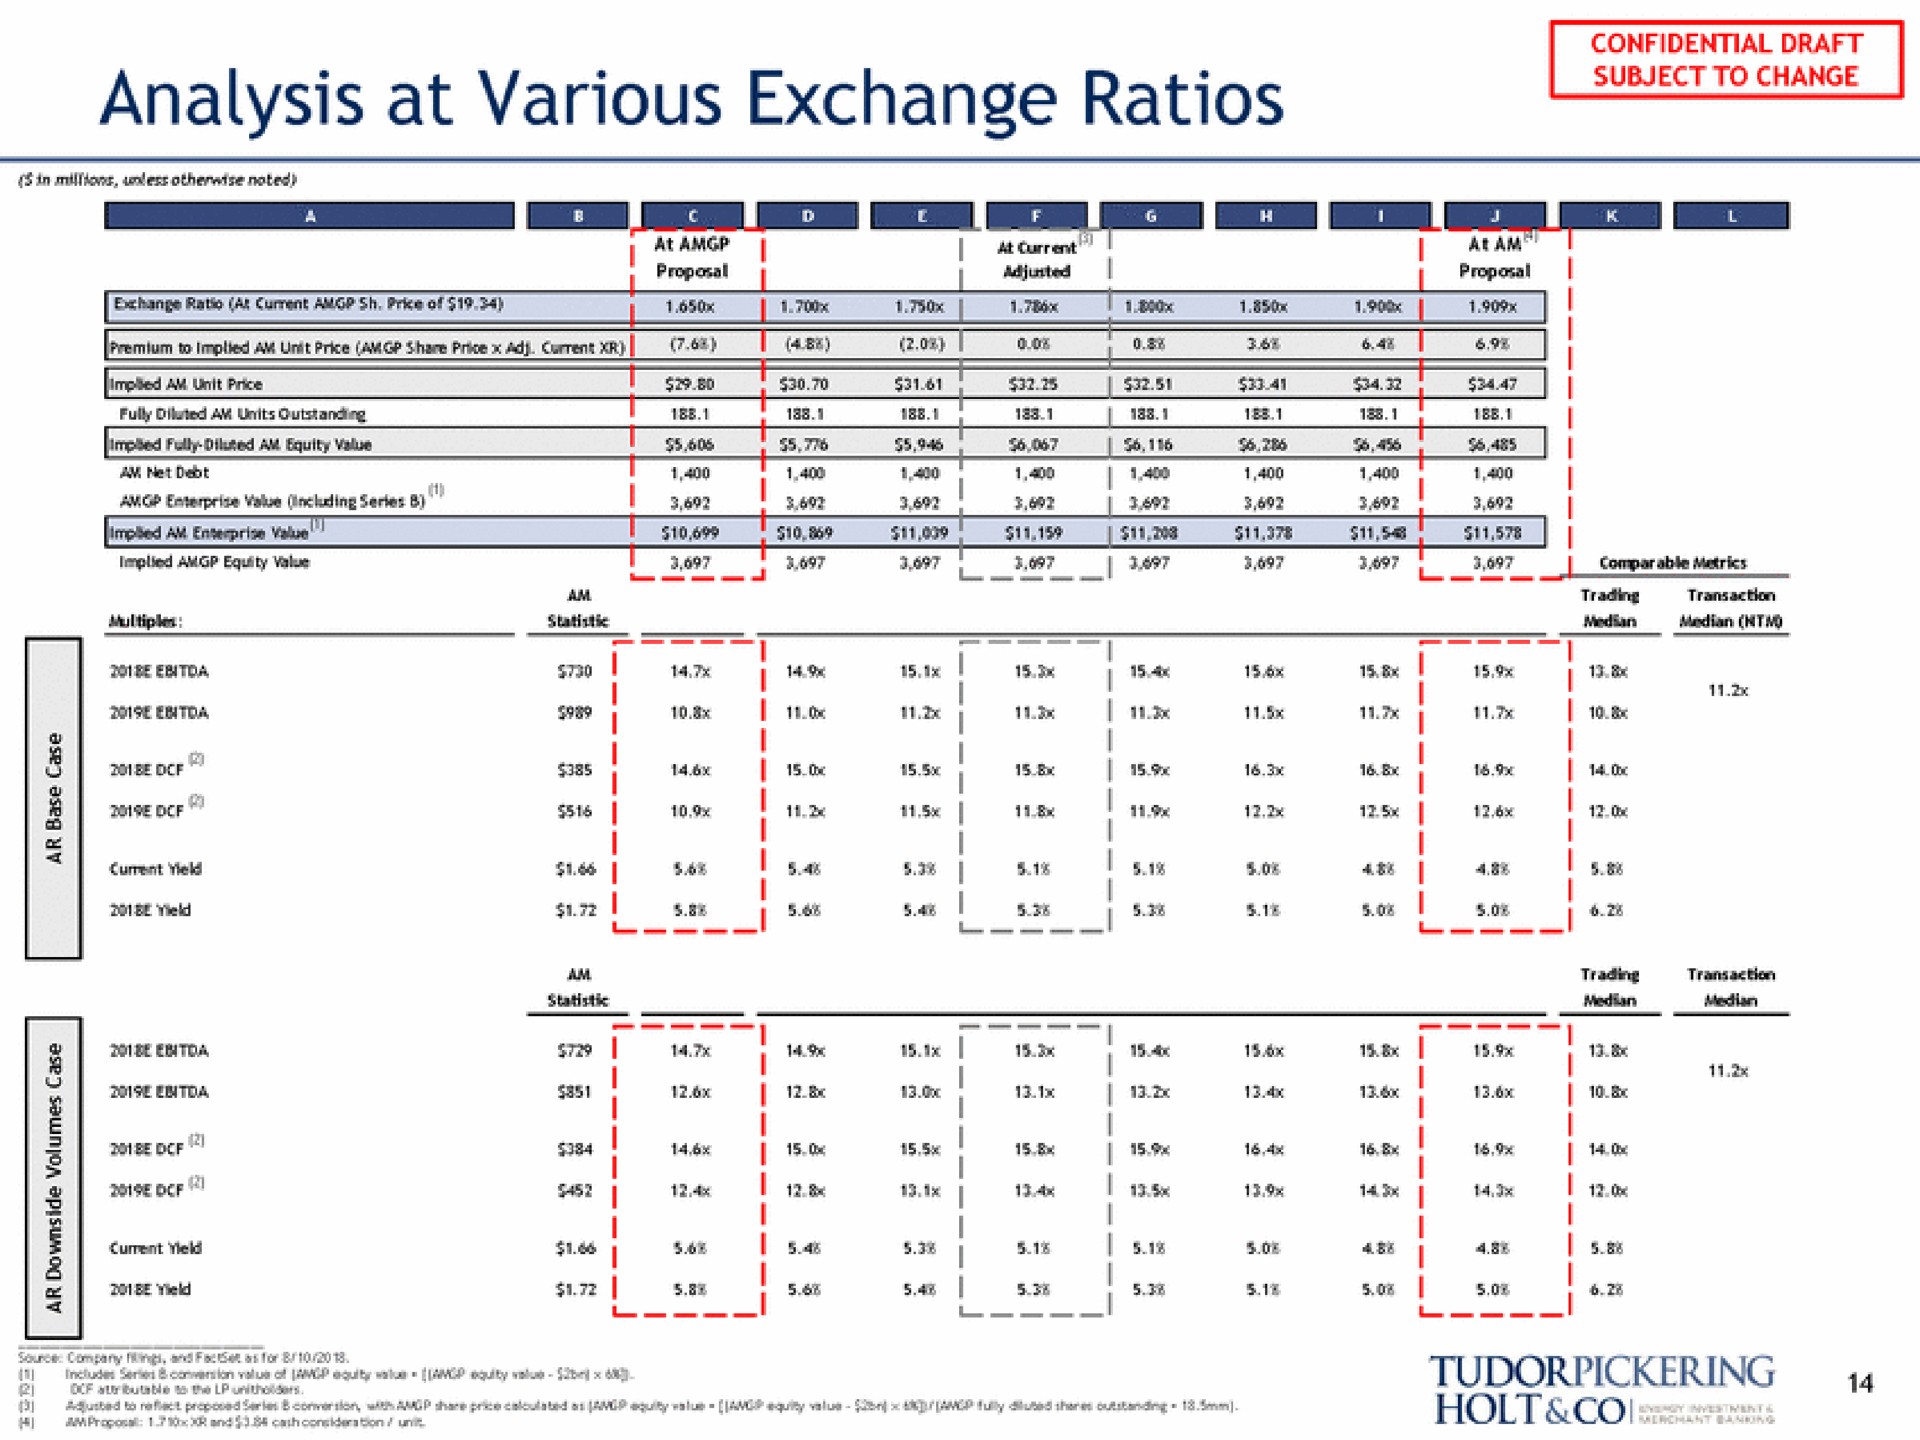 analysis at various exchange ratios i i | Tudor, Pickering, Holt & Co